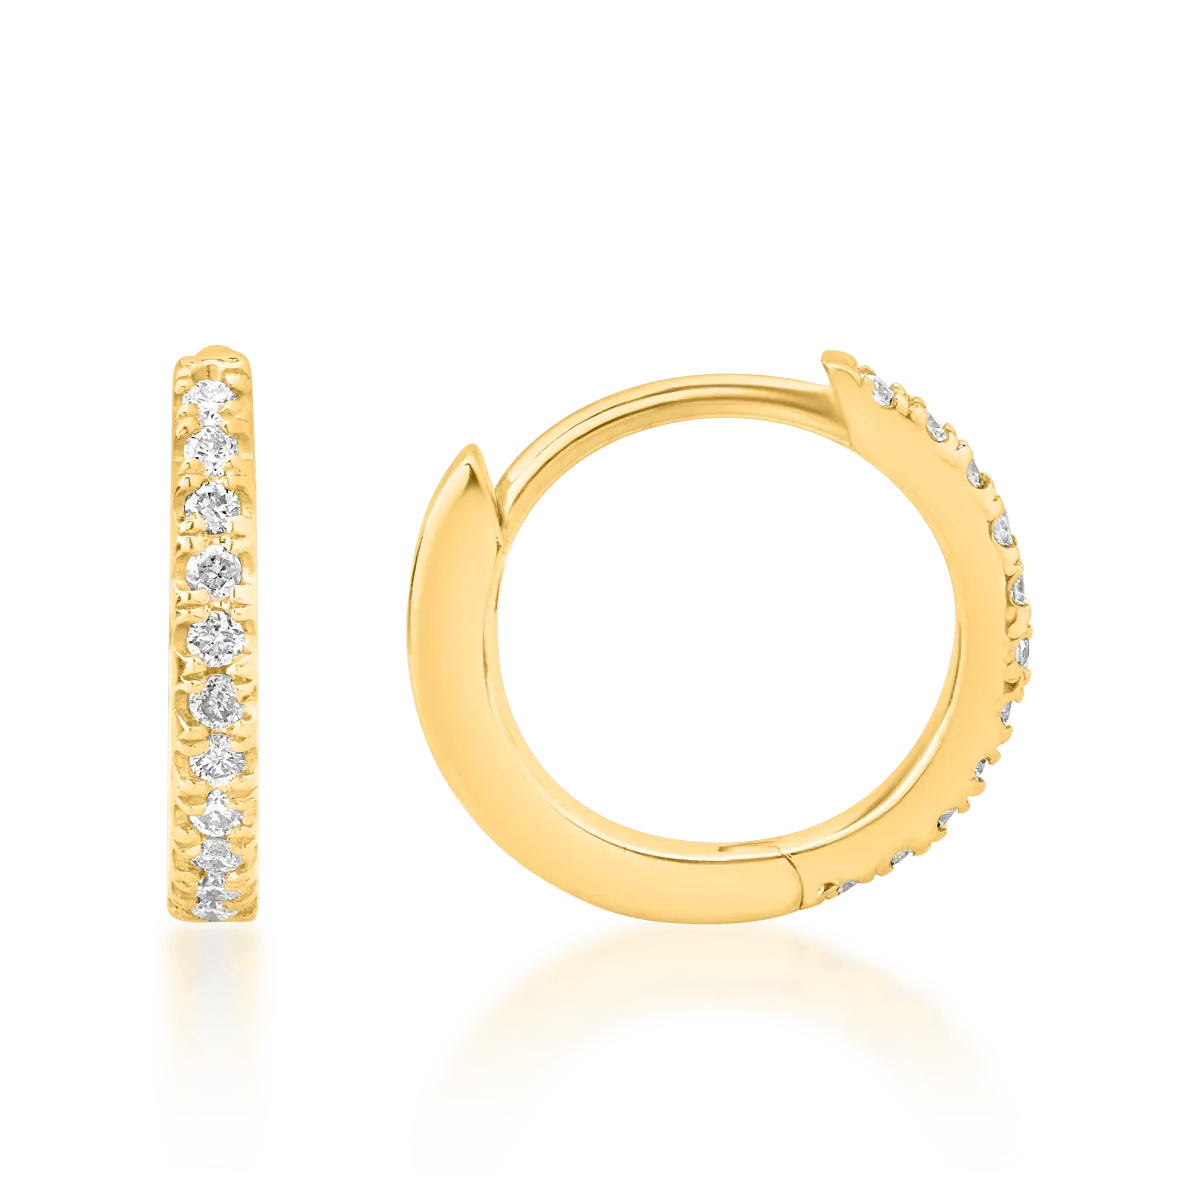 18K yellow gold earrings with 0.08ct diamonds